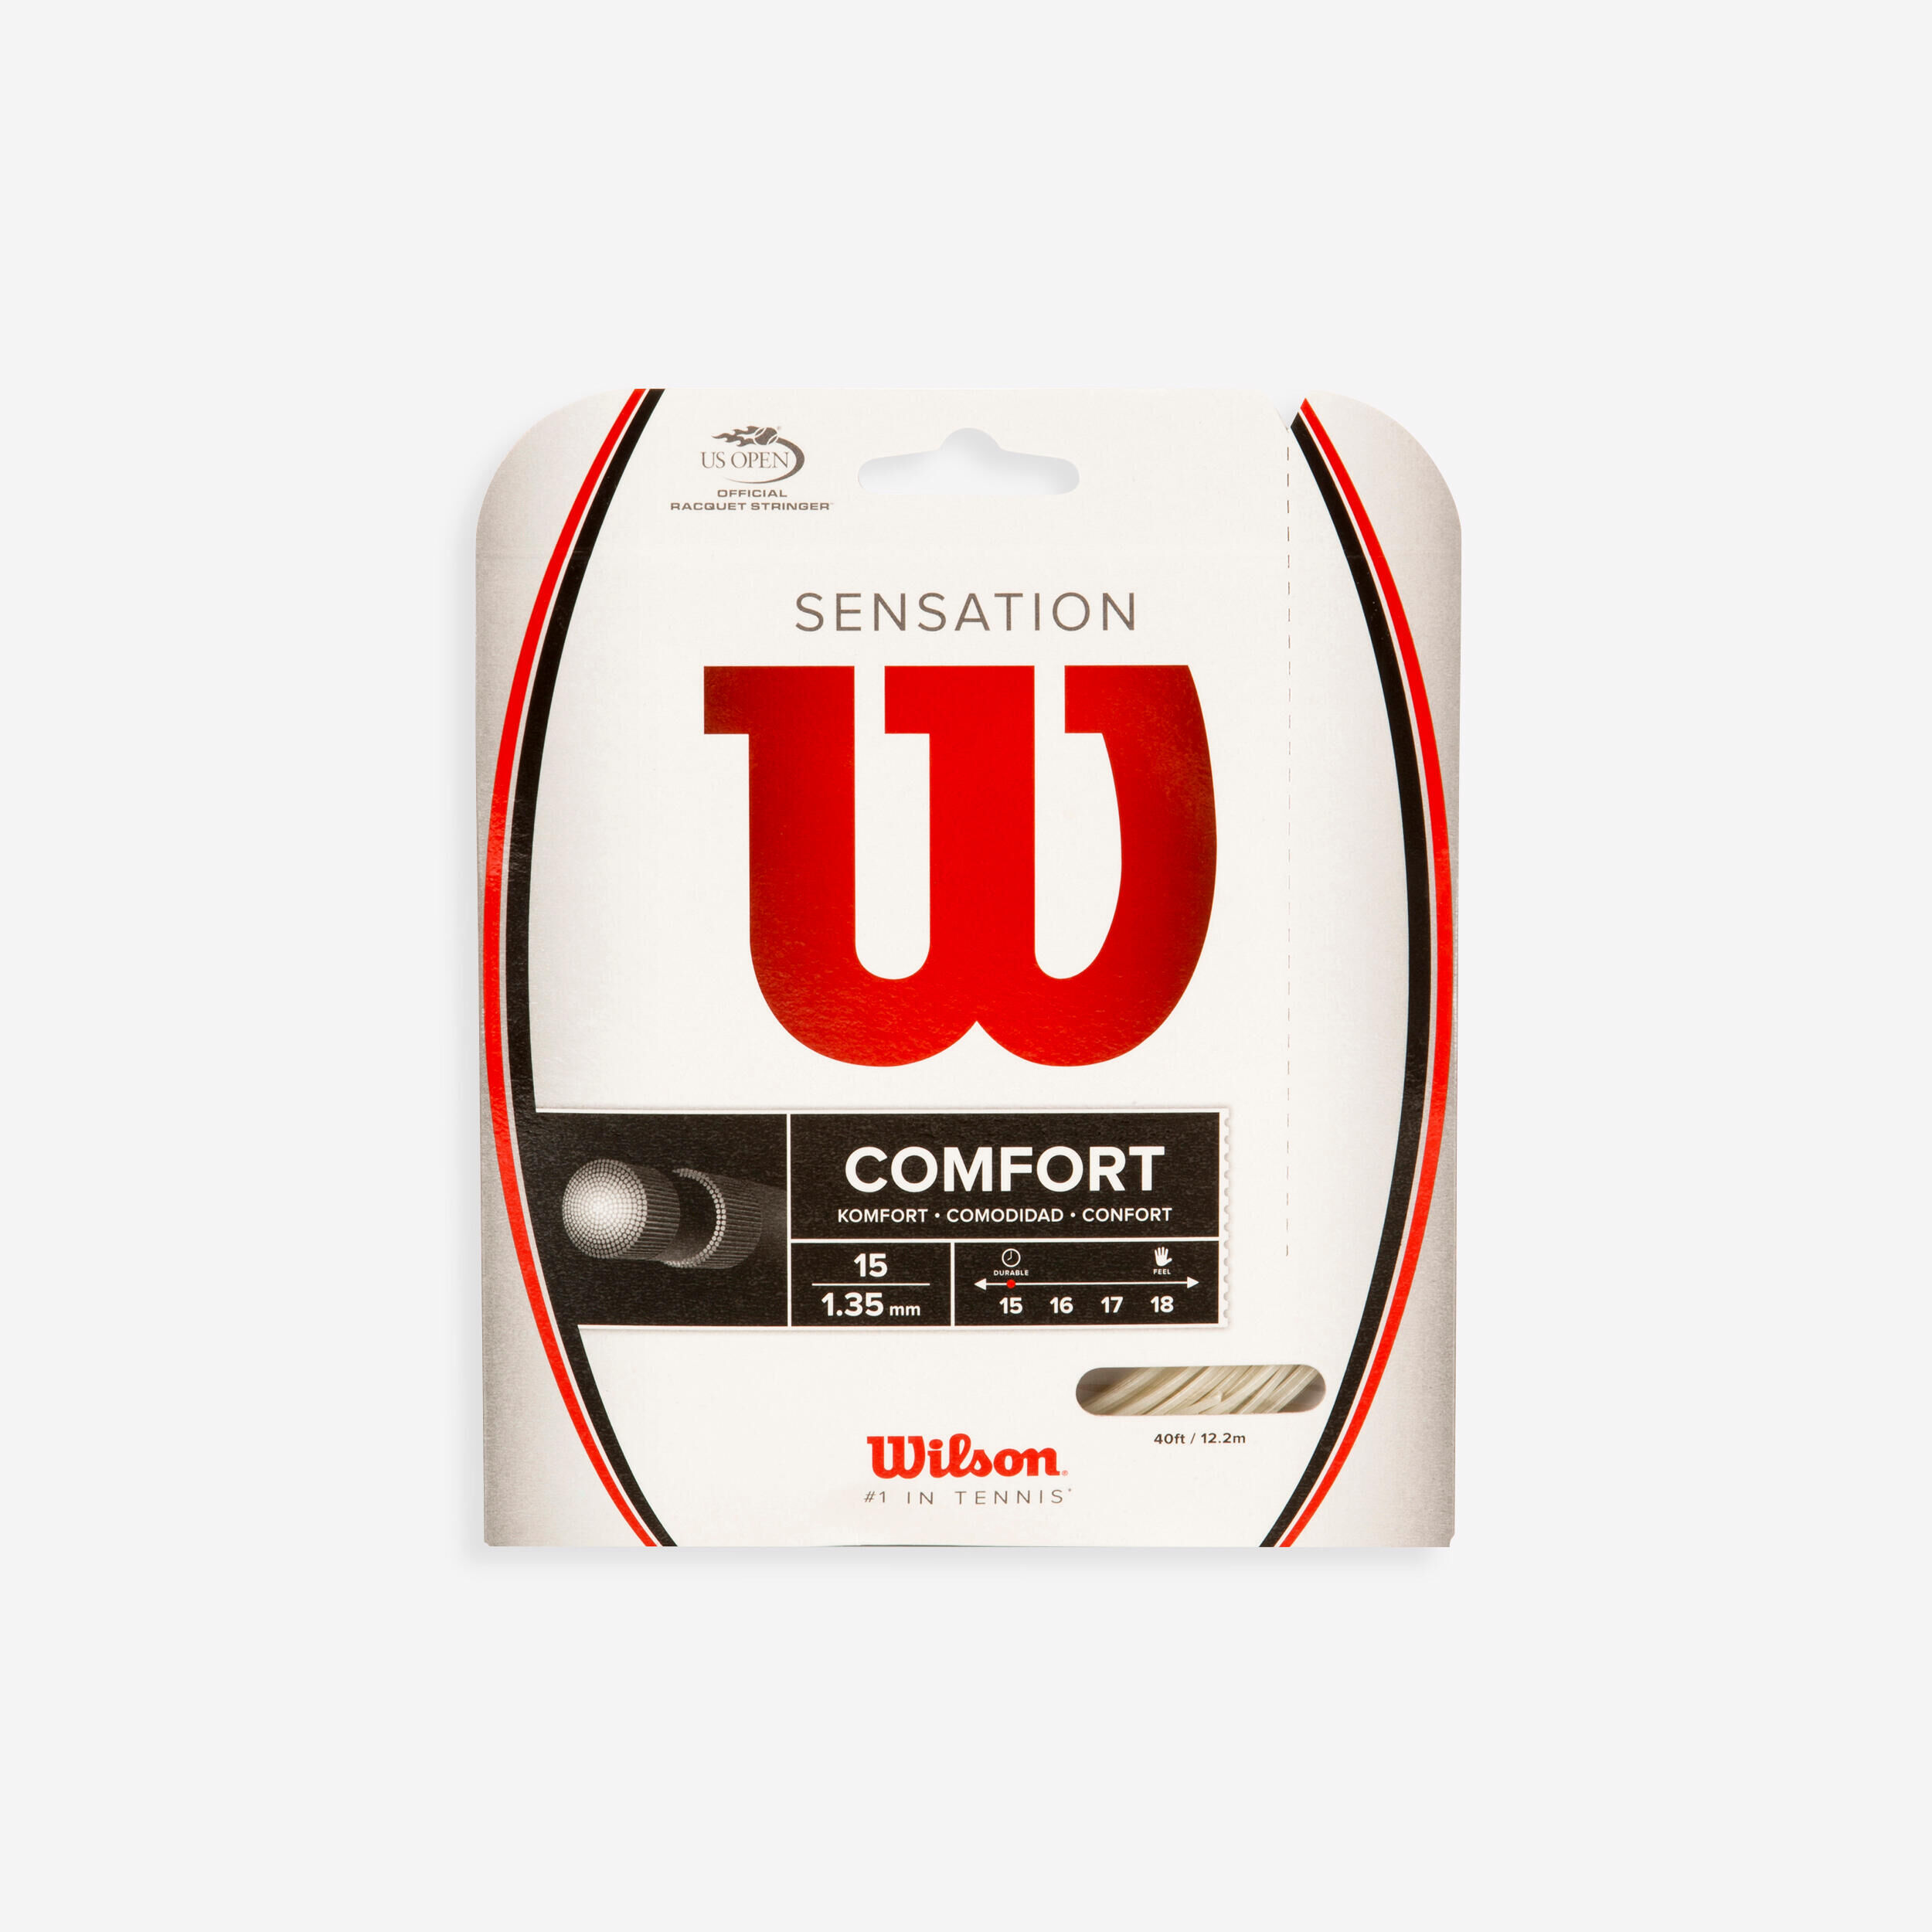 WILSON Sensation 1.35 mm Tennis String - White